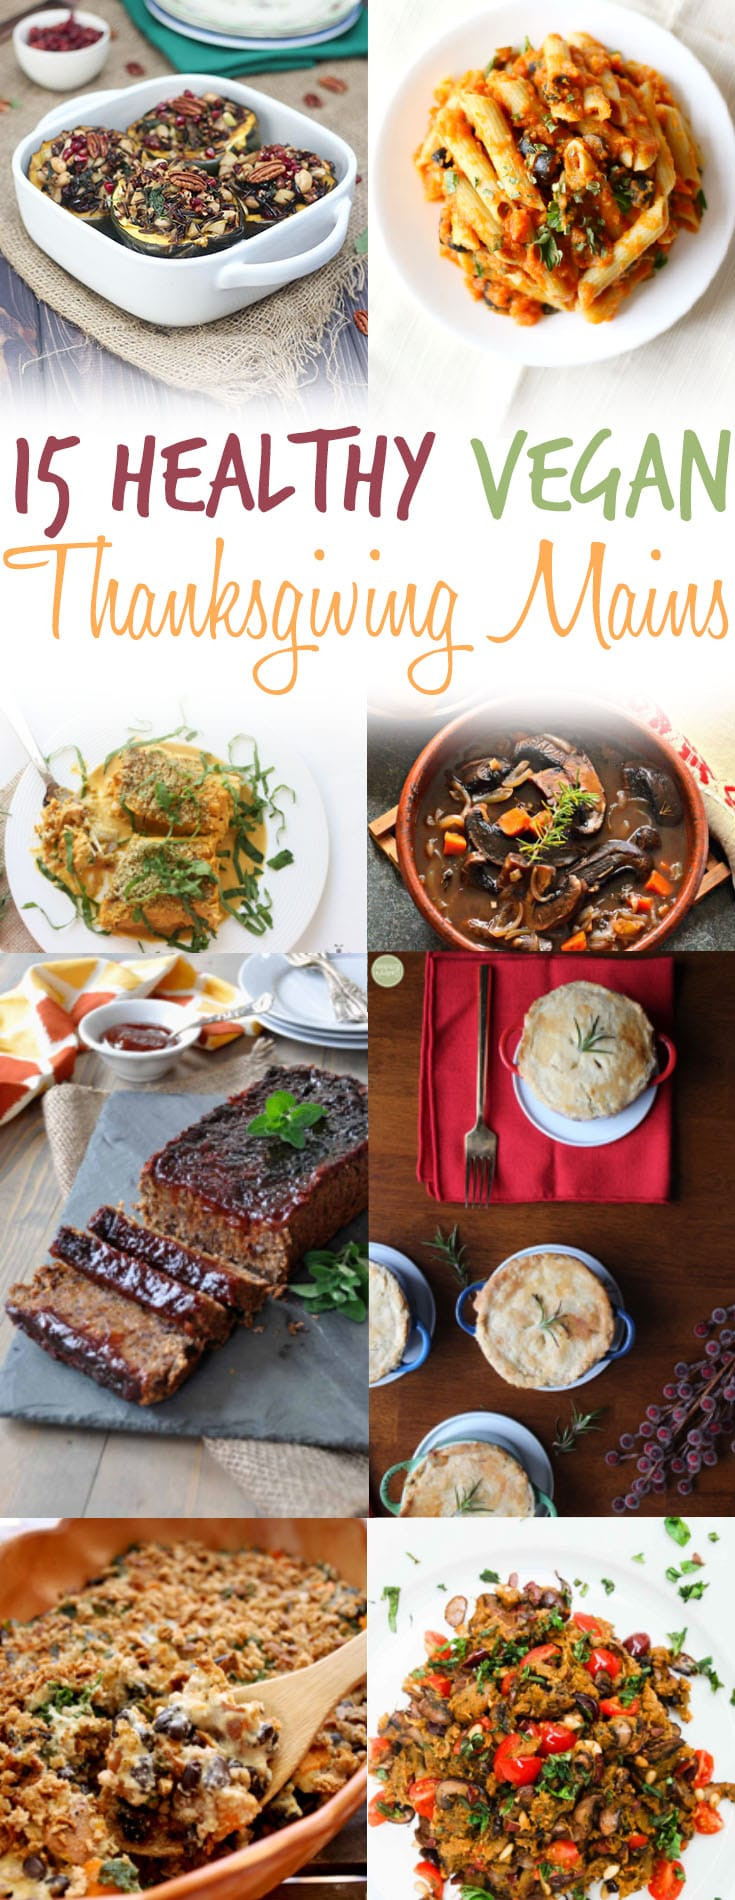 Vegan Recipes Main Dishes
 15 Vegan Thanksgiving Main Dishes